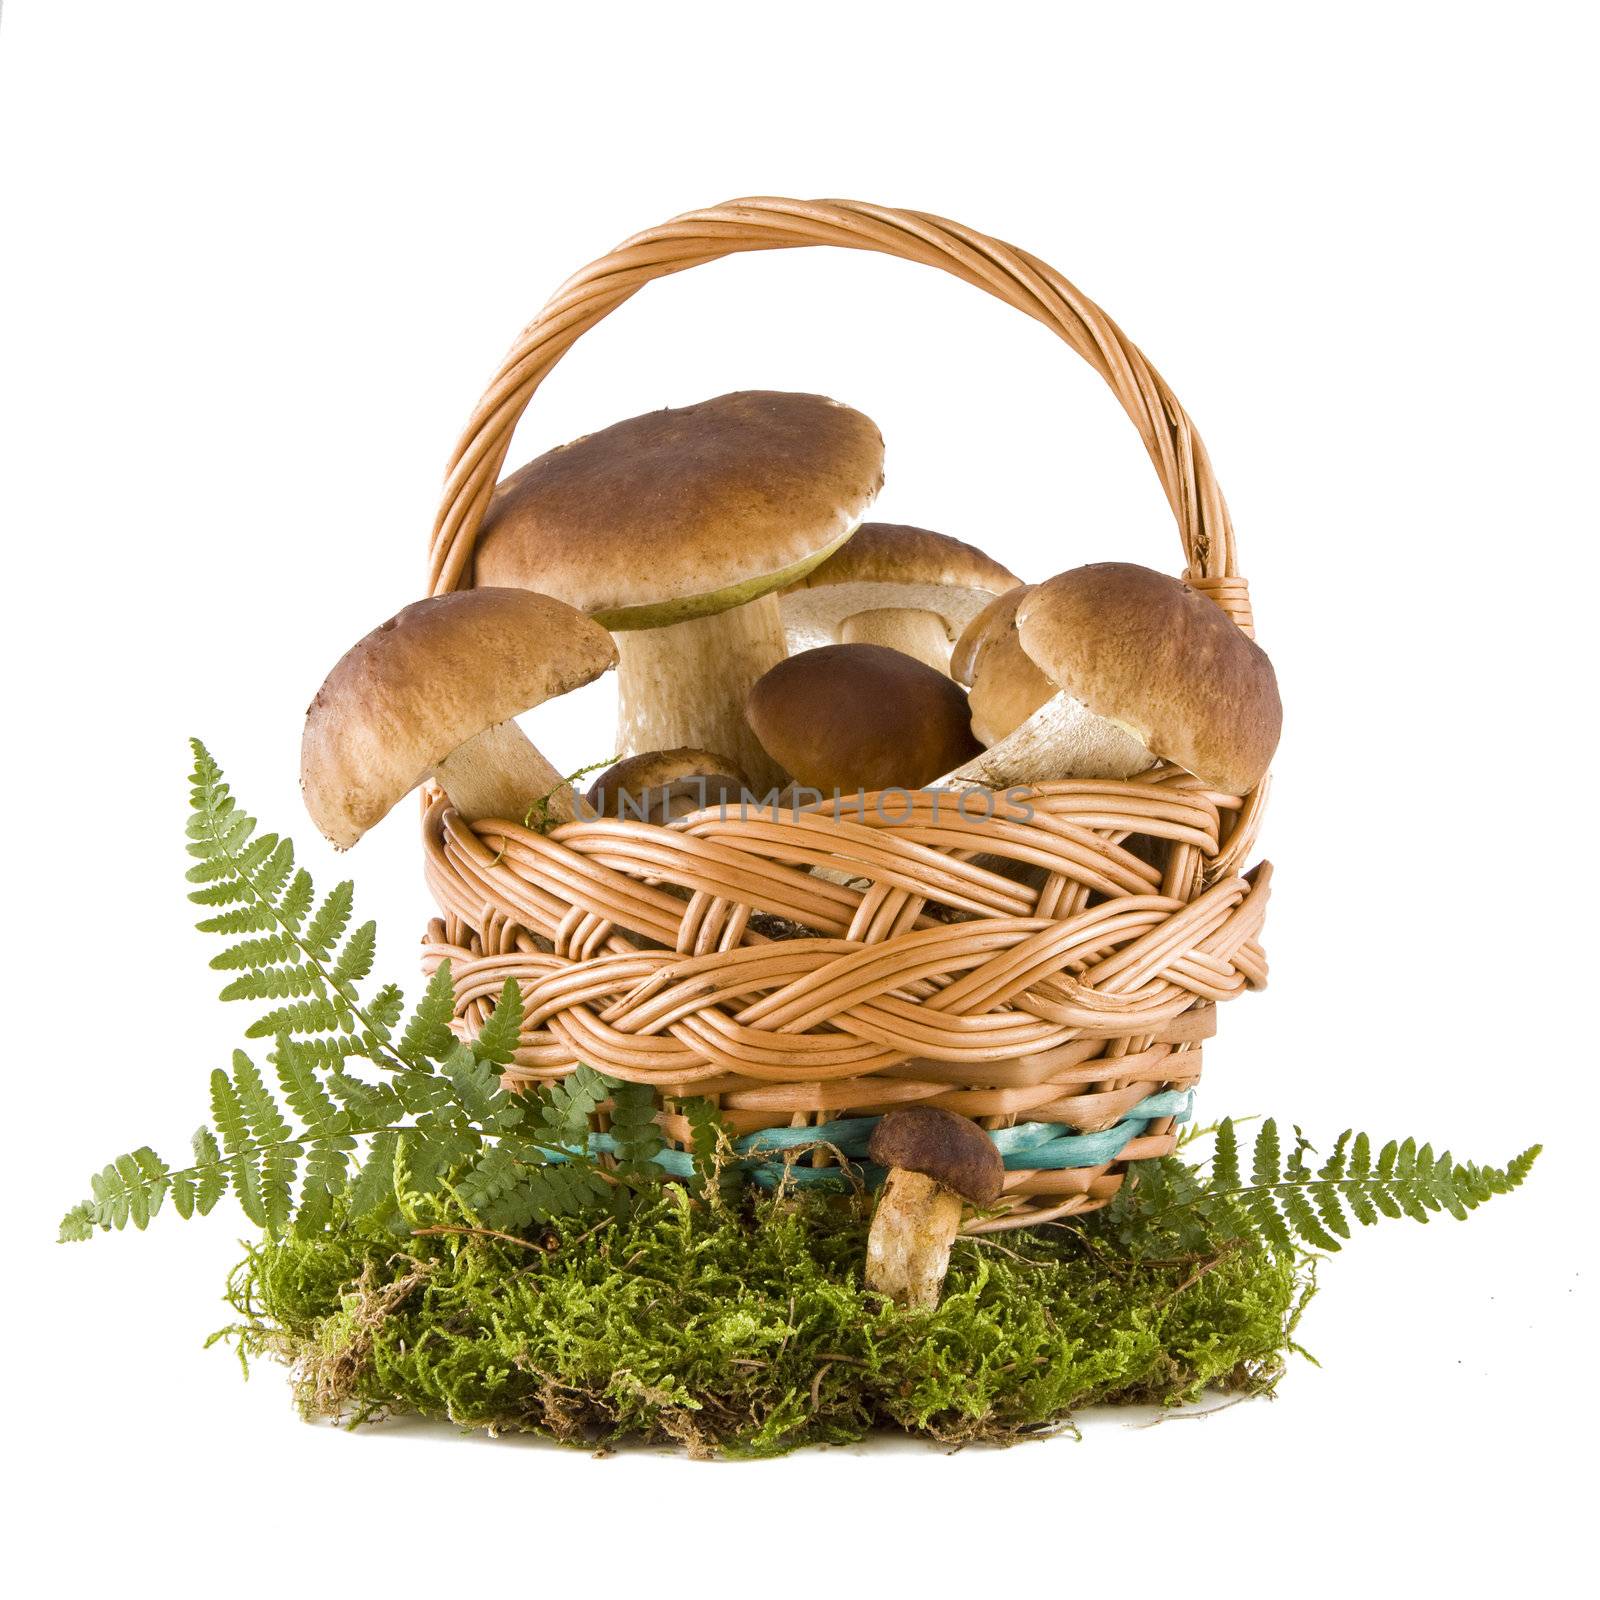 Boletus mushrooms in a basket by Gbuglok